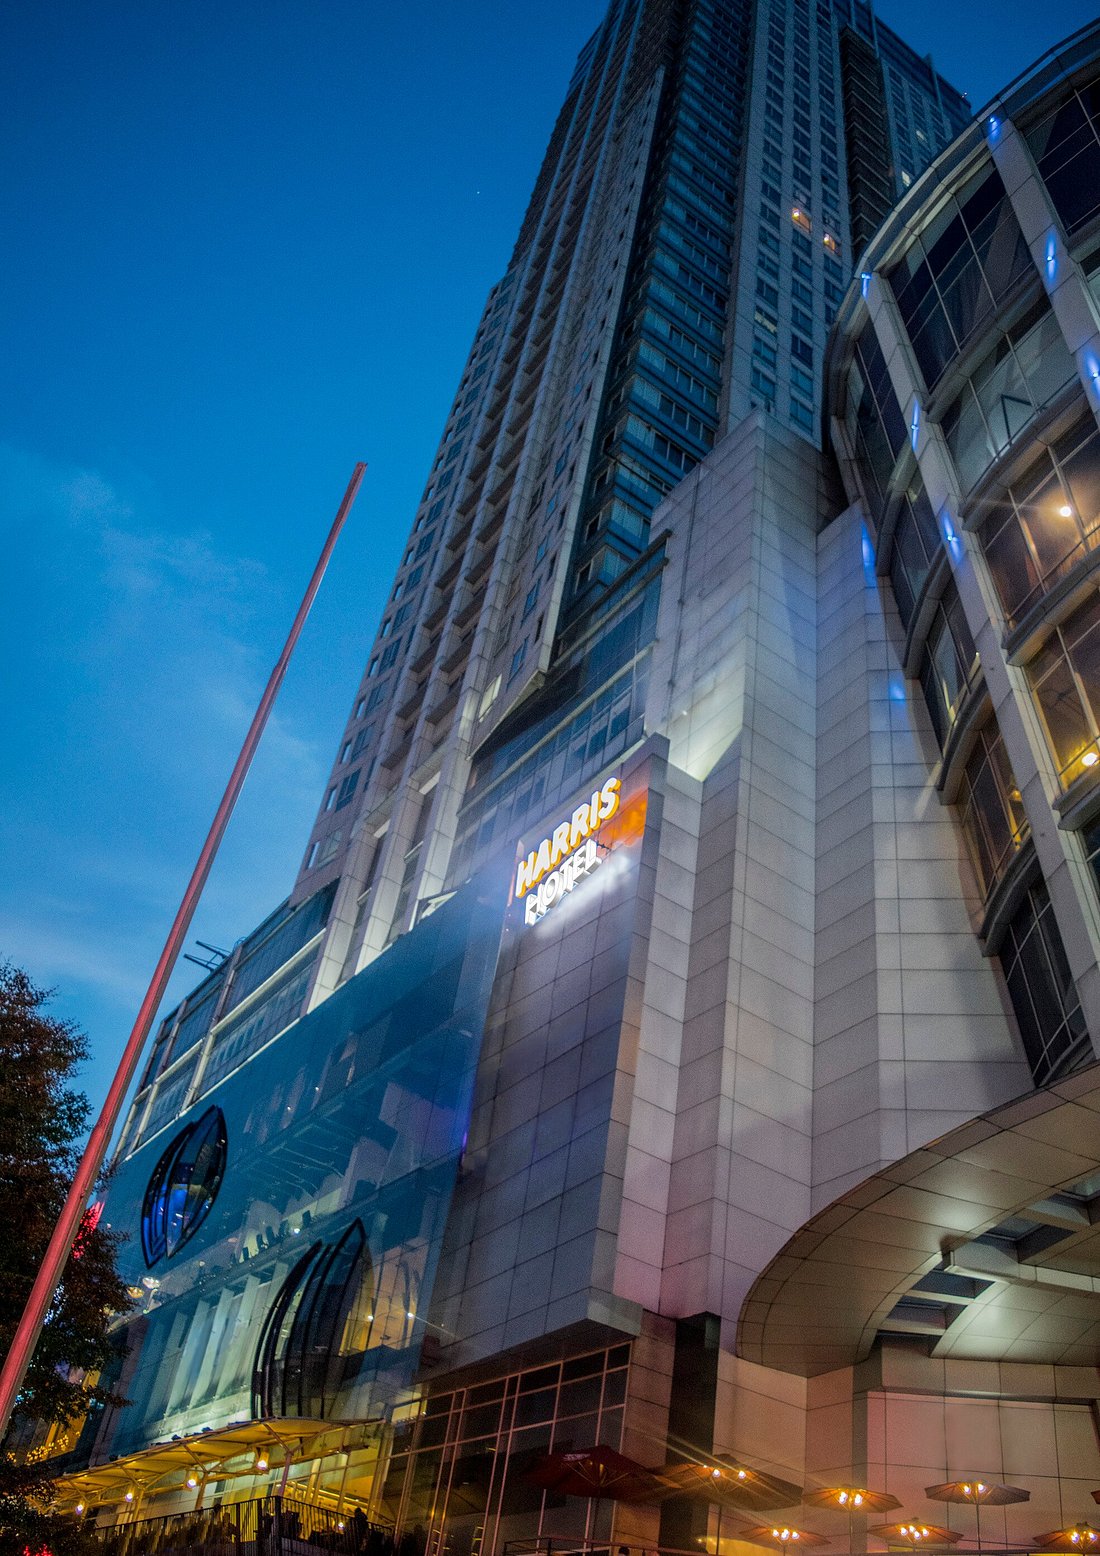 HARRIS SUITES FX SUDIRMAN - Hotel Reviews & Price Comparison (Jakarta)